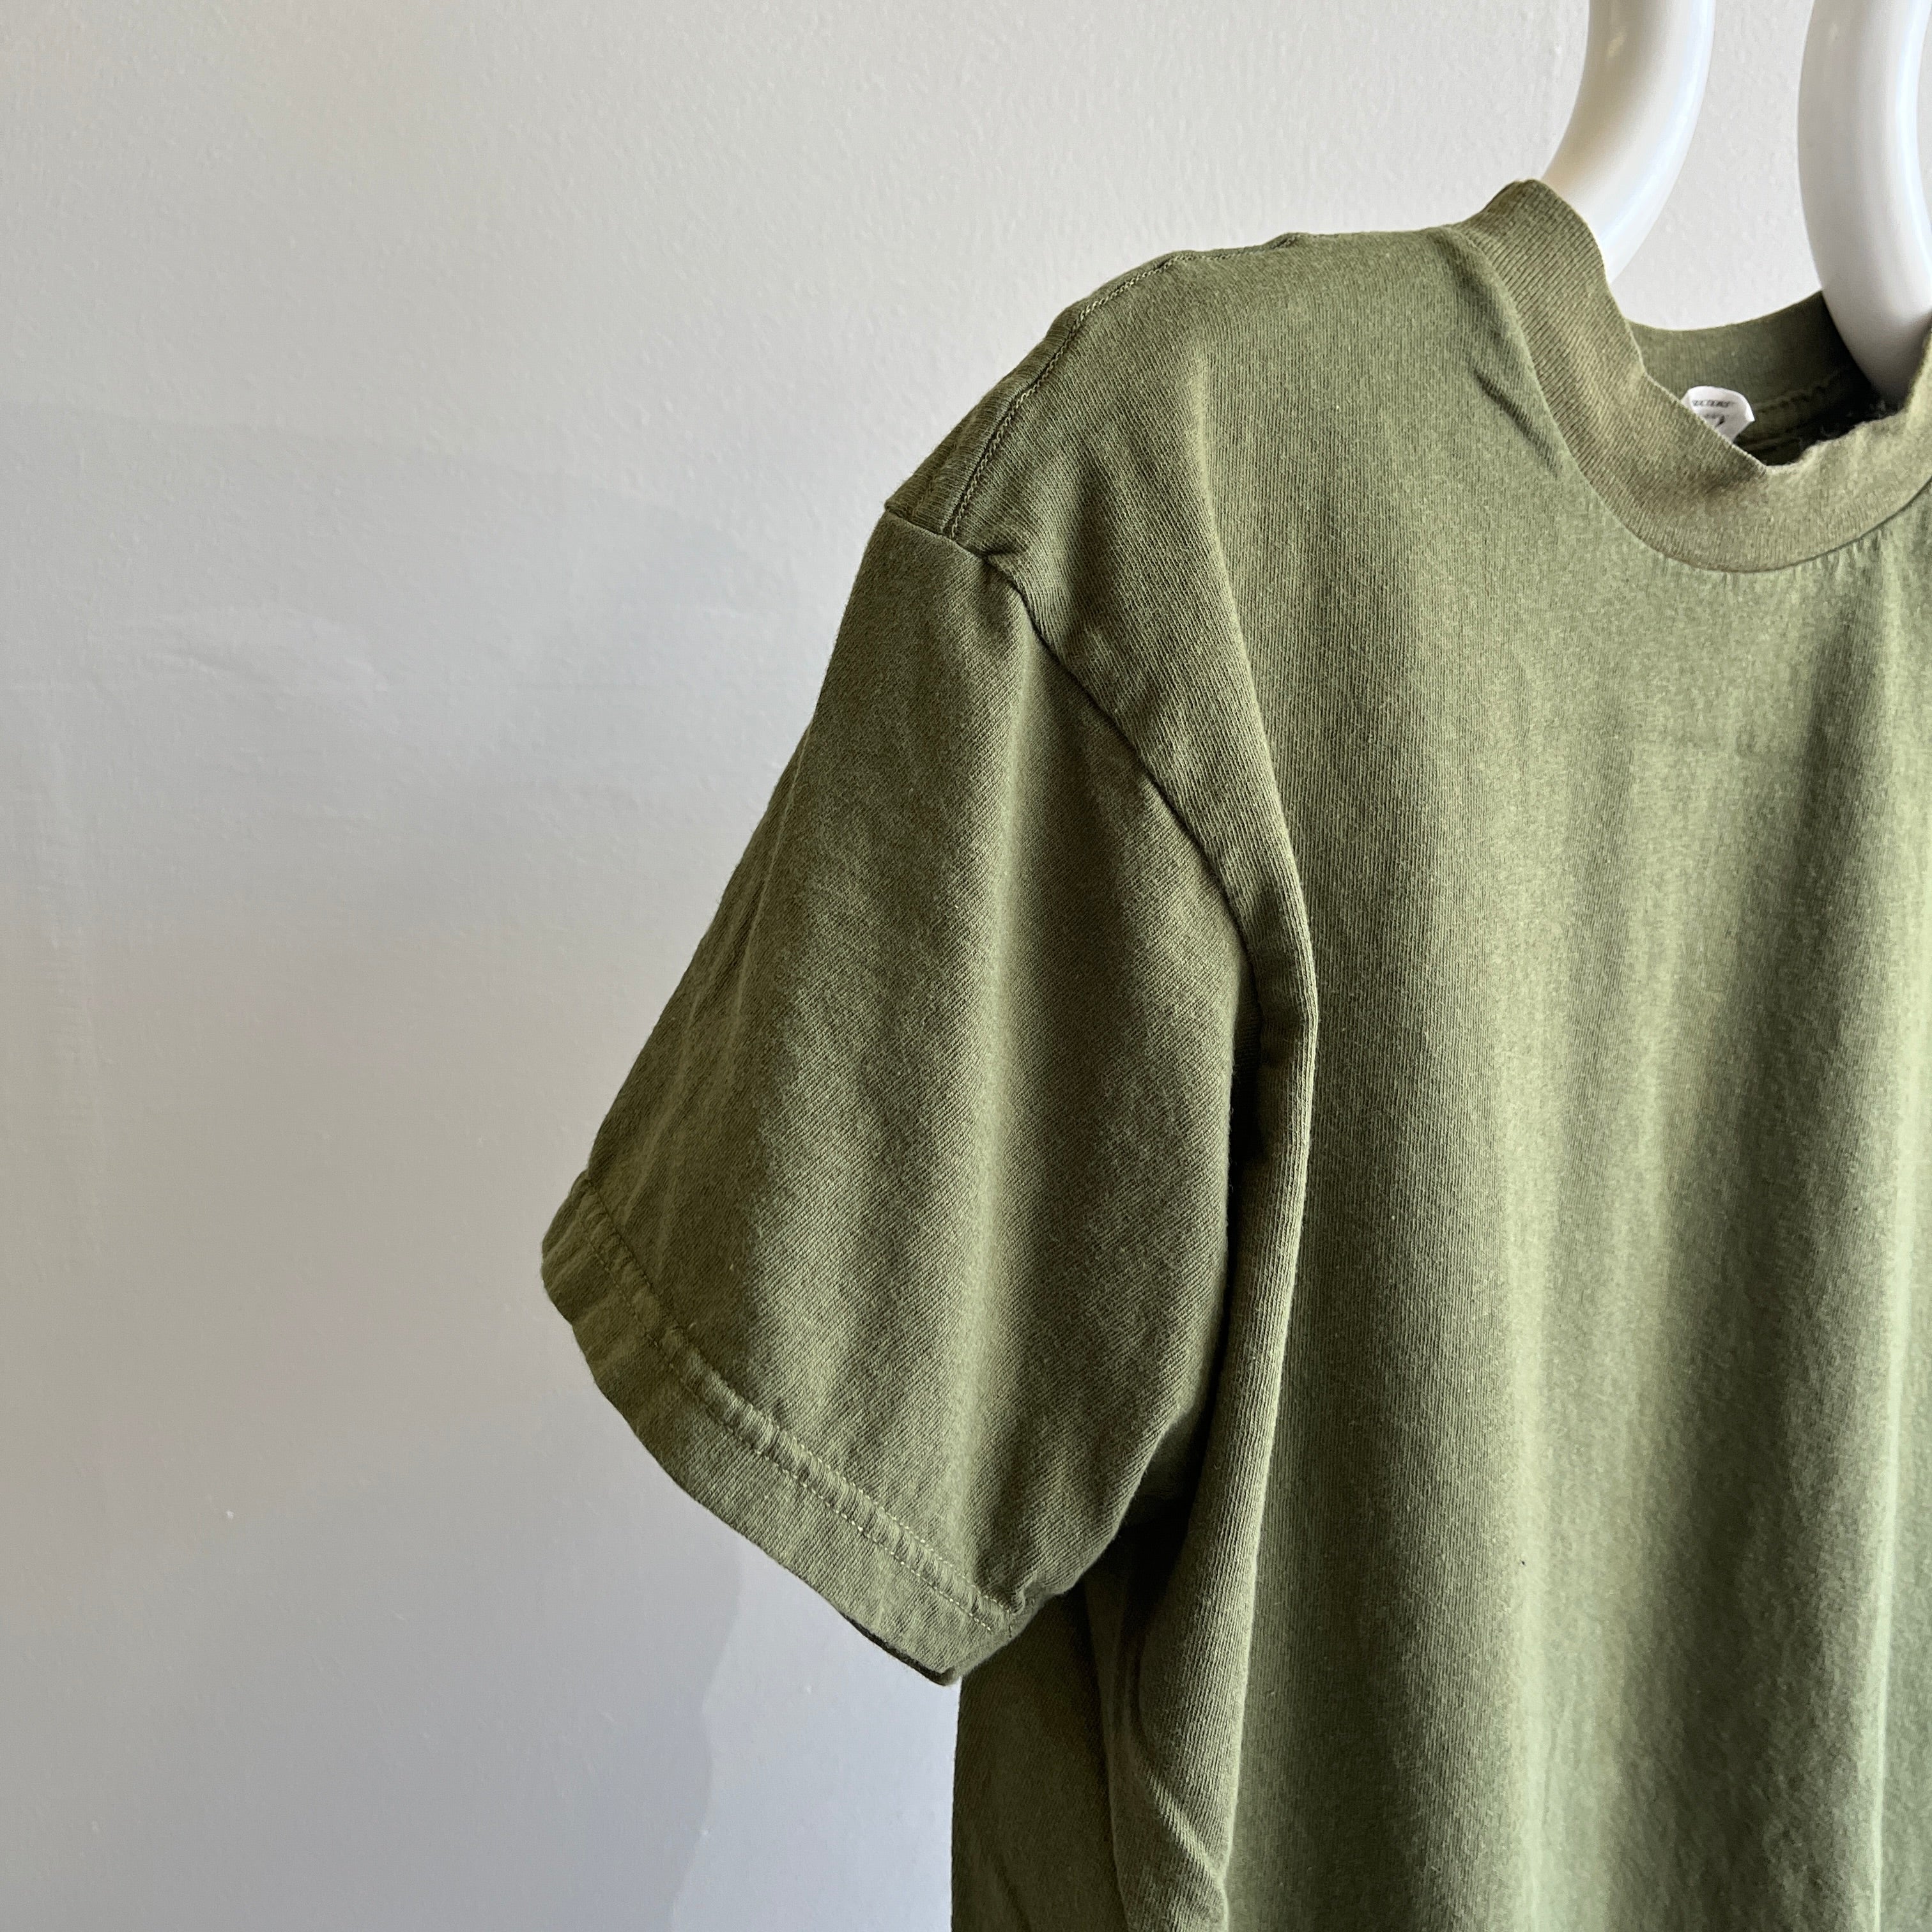 GG - 1980s Blank Army Green T-Shirt